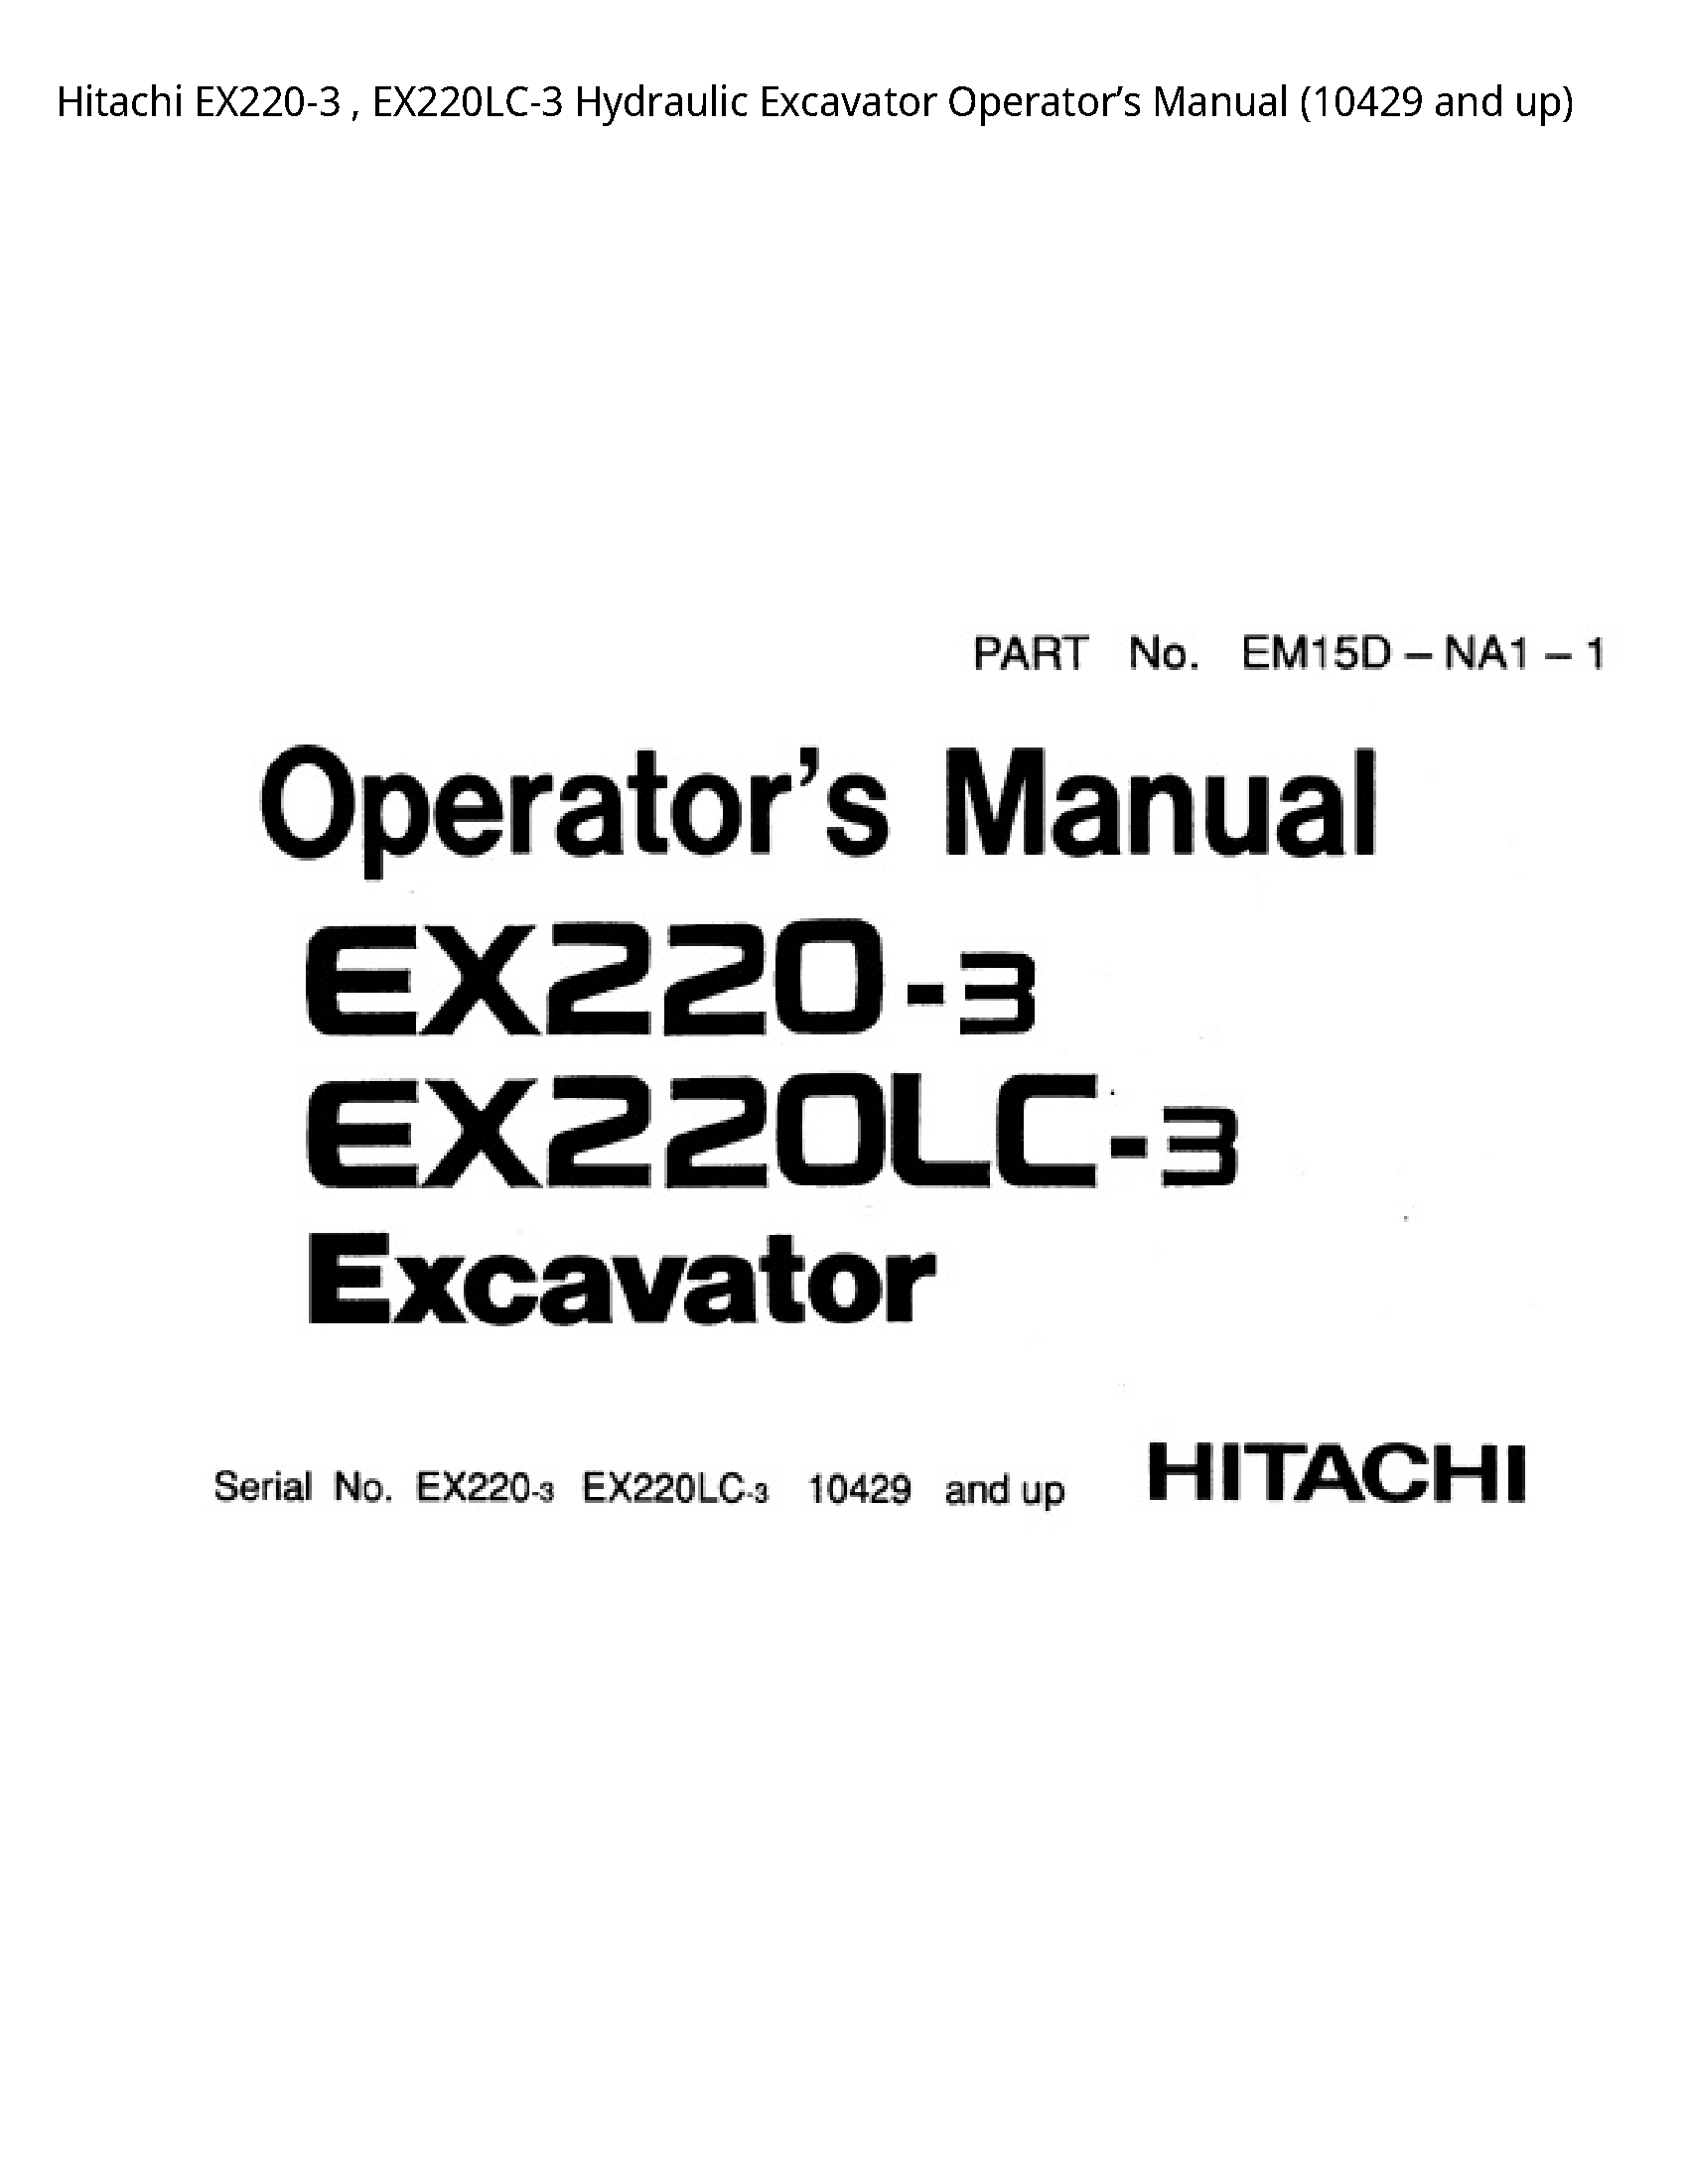 Hitachi EX220-3 Hydraulic Excavator Operator’s manual